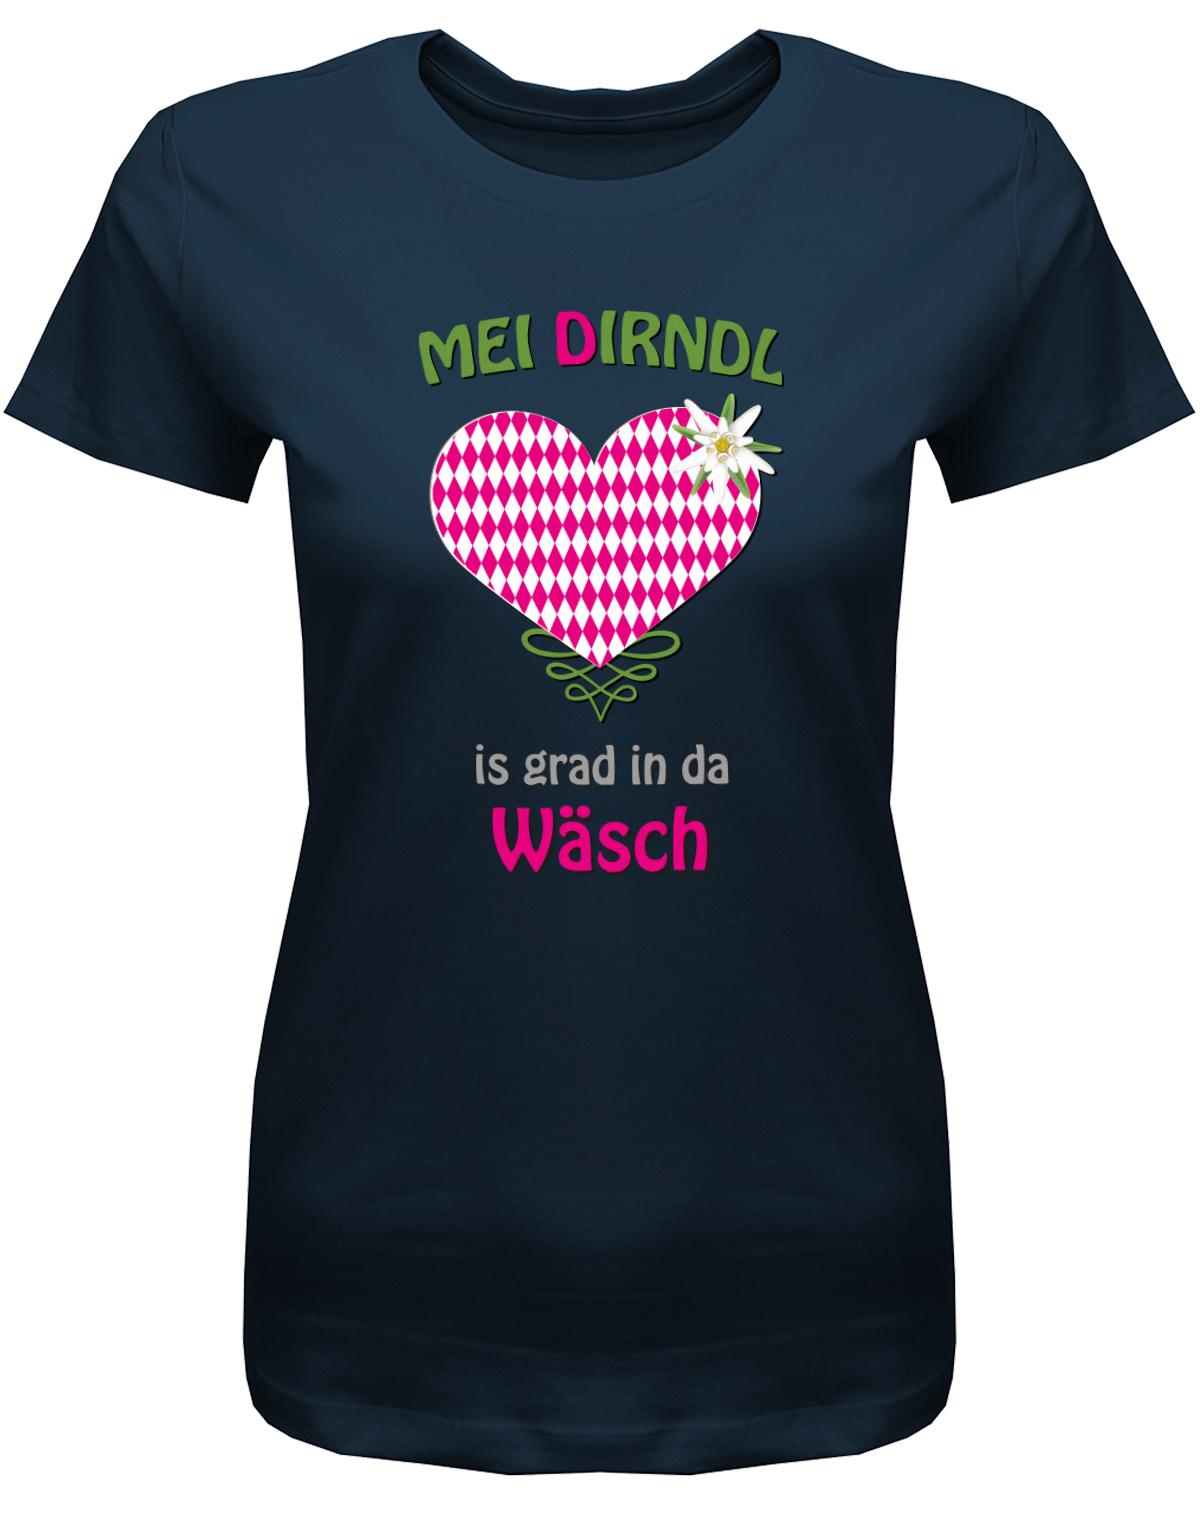 Mei-Dirndl-is-grad-in-da-w-sch-damen-shirt-navy